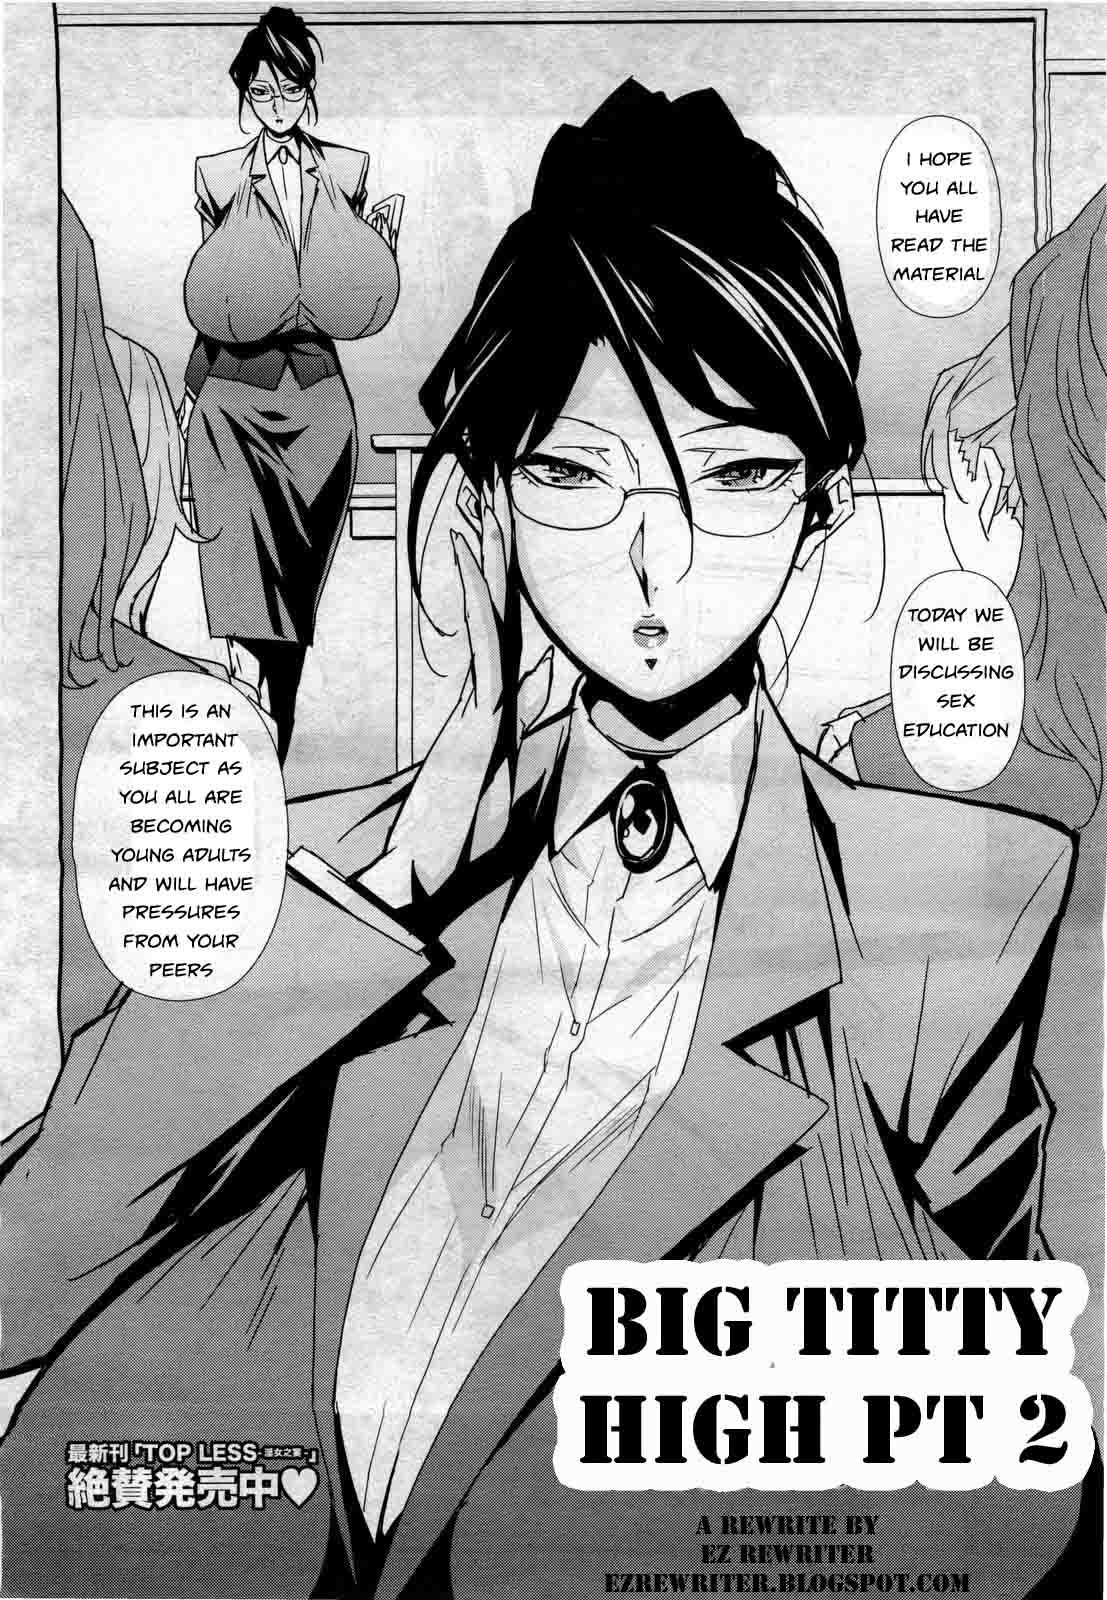 Big Titty High pt1-6 (rewrite by ezrewriter) 